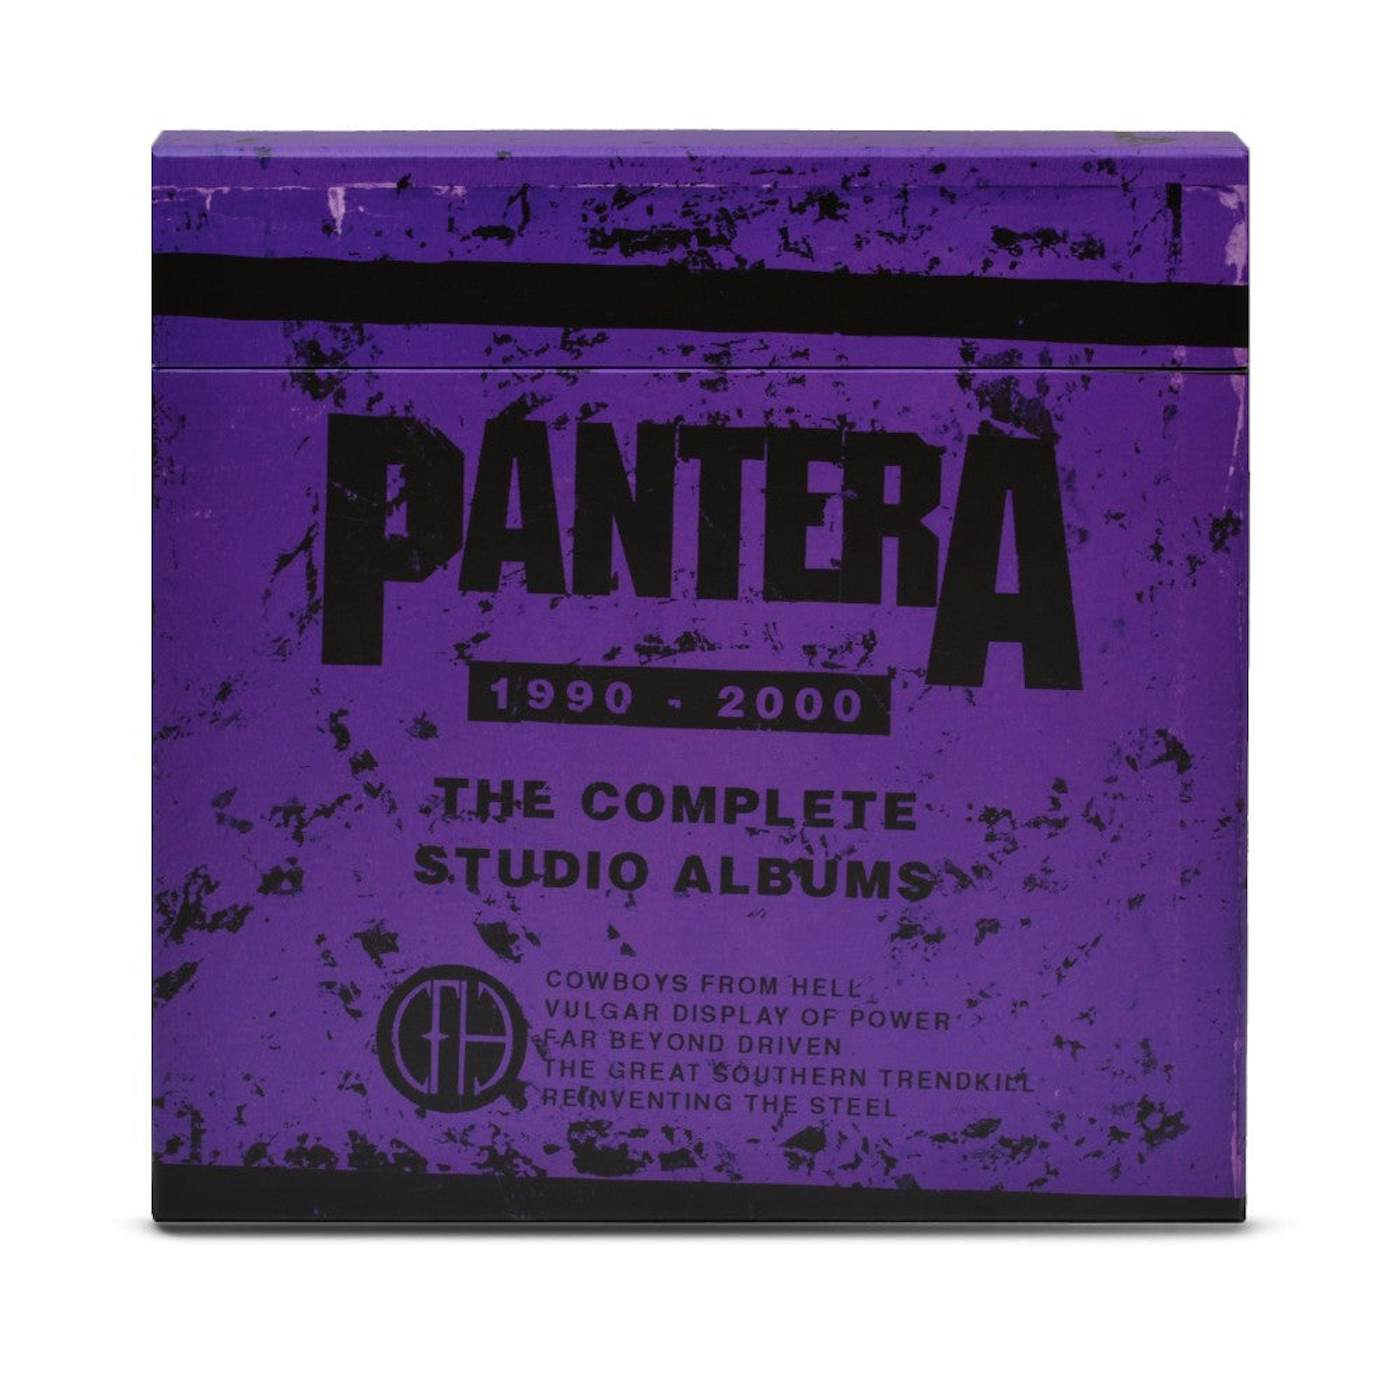 Pantera The Complete Studio Albums 1990-2000 (Picture Disc Boxed Set)